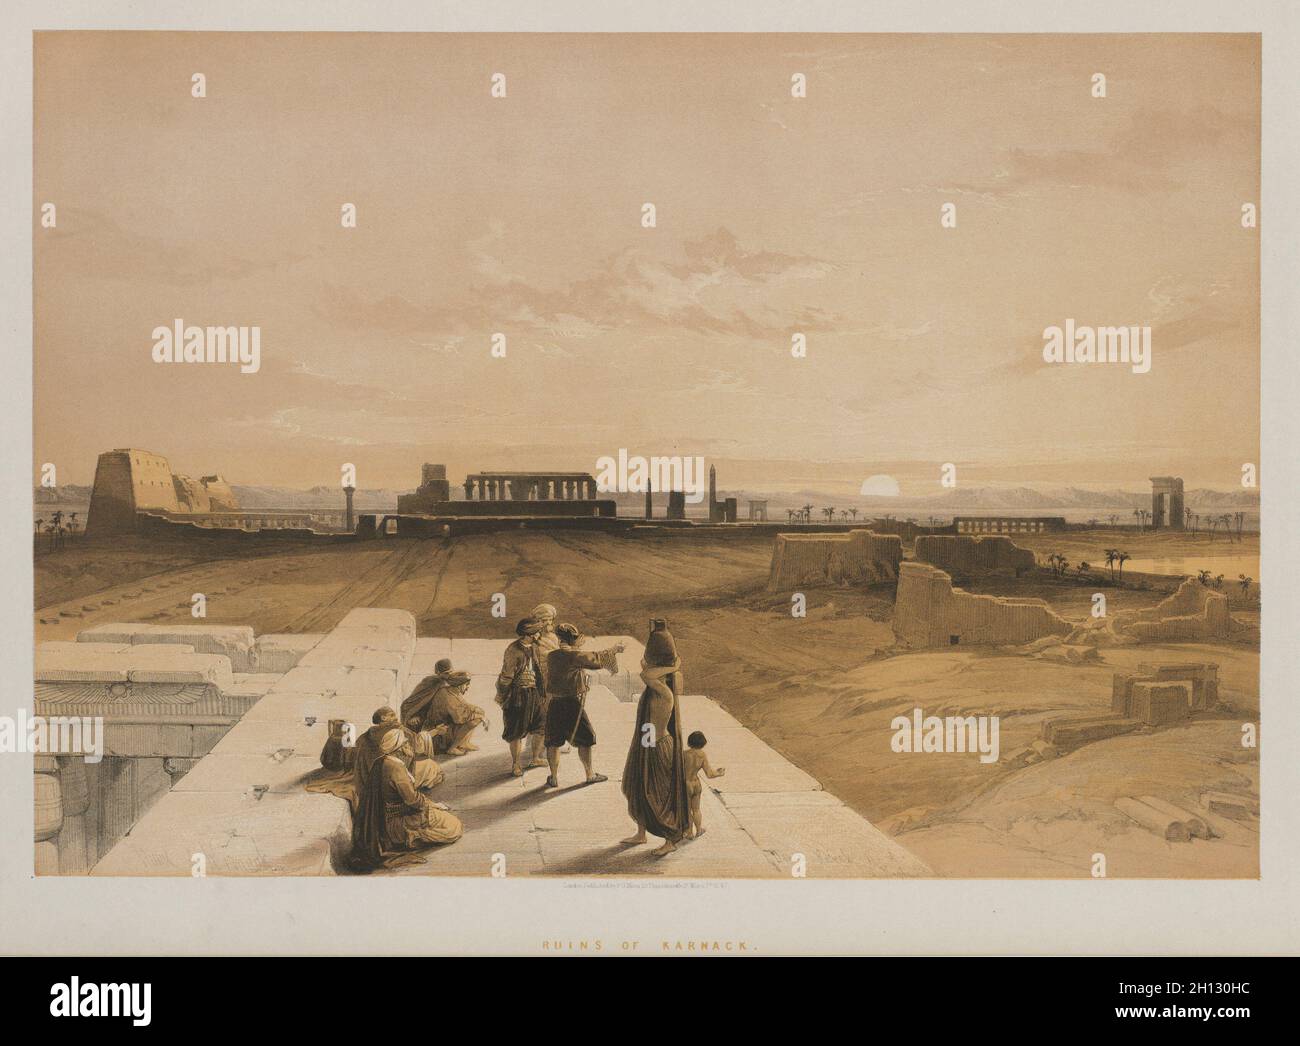 Ägypten und Nubien, Band I: Ruins of Karnac, 1847. Louis Haghe (British, 1806-1885), F. G. Moon, 20 Threadneedle Street, London, Nach David Roberts (Scottish, 1796-1864). Farblithographie; Blatt: 43 x 60.4 cm (16 15/16 x 23 3/4 Zoll); Bild: 35.2 x 51 cm (13 7/8 x 20 1/16 Zoll). Stockfoto